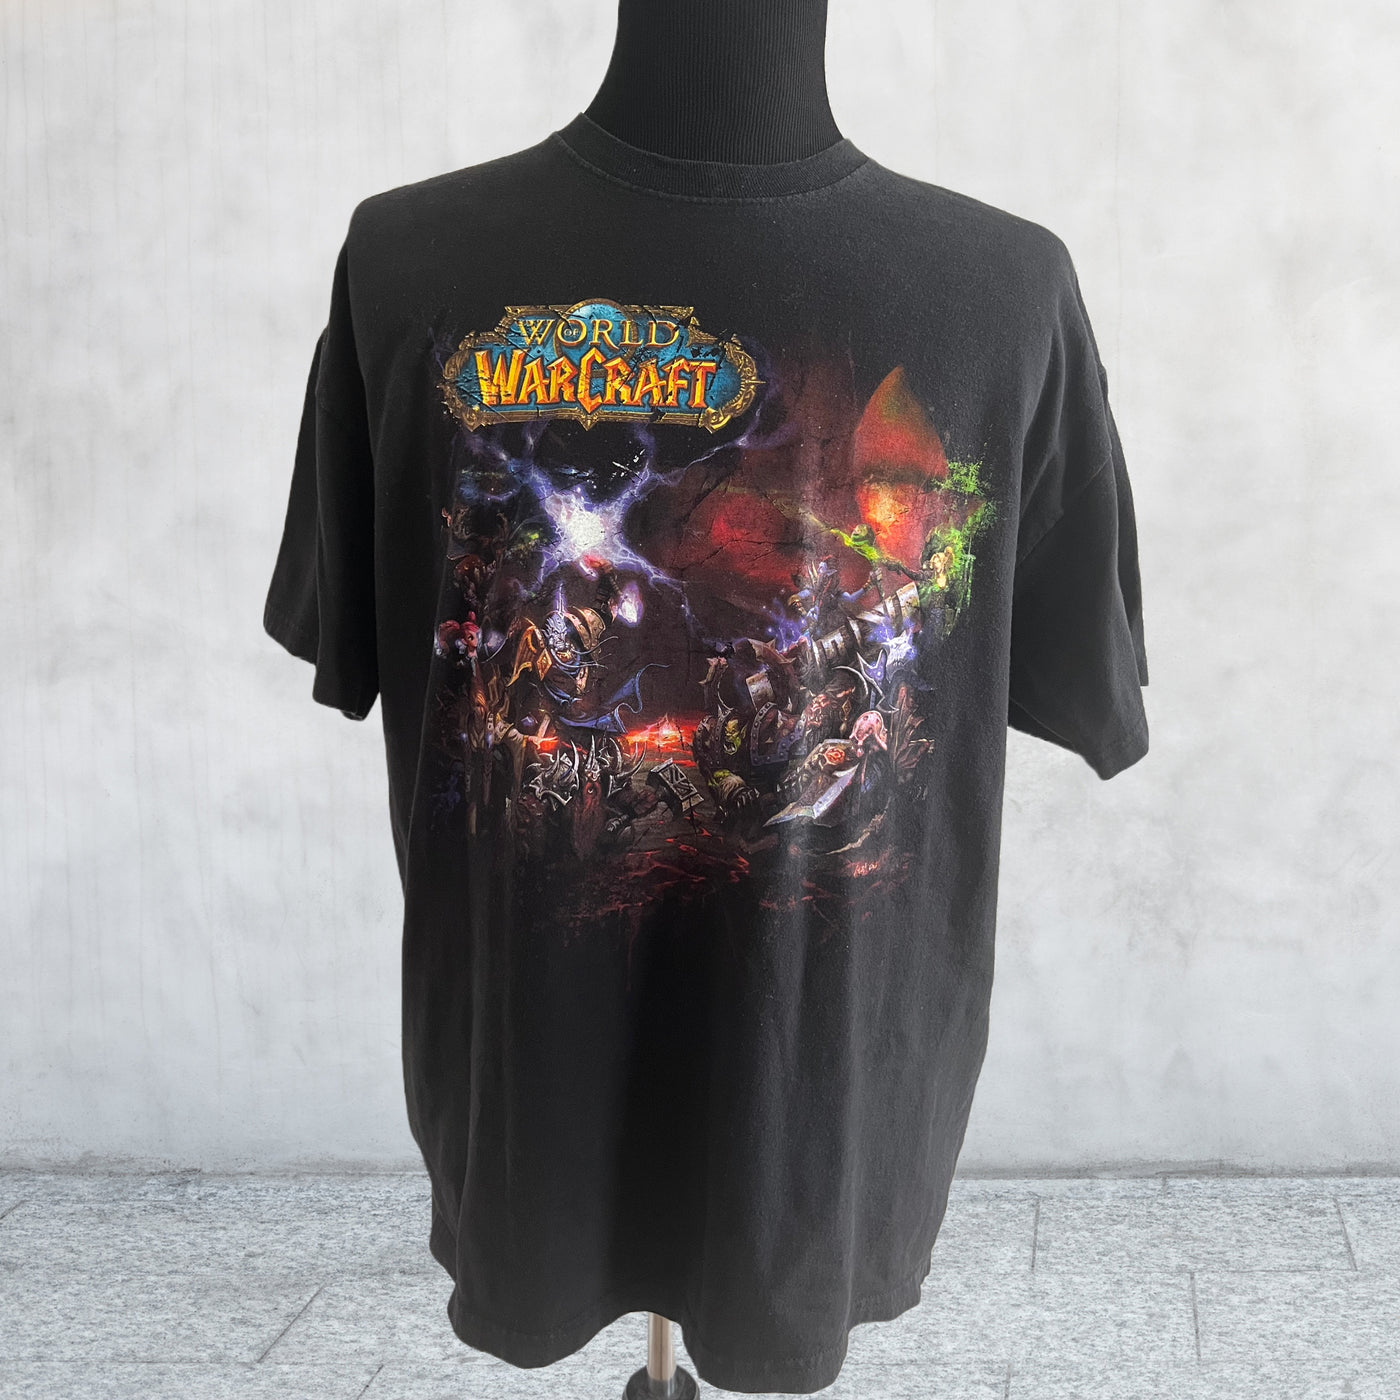 Vintage World of Warcraft video game promo T-shirt 2004. XL